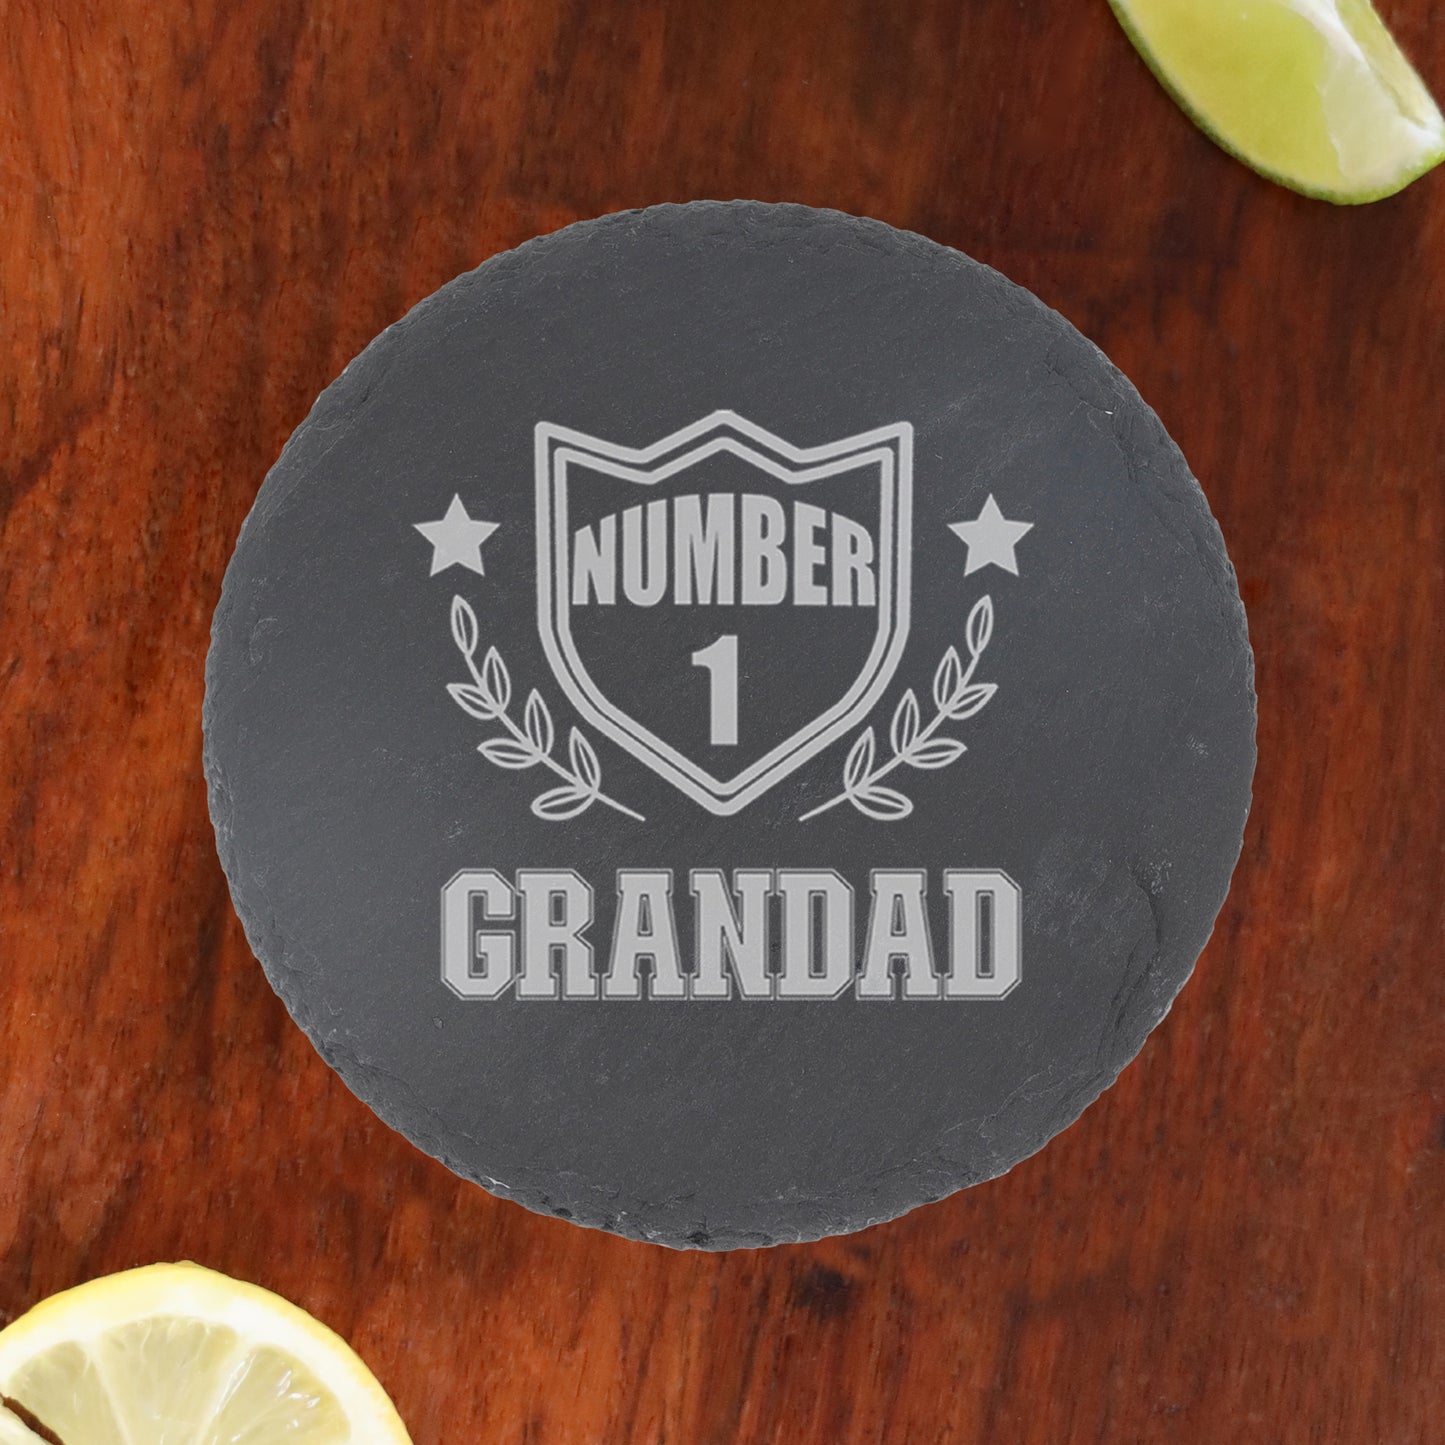 Engraved "Number 1 Grandad" Wine Glass and/or Coaster Set  - Always Looking Good -   